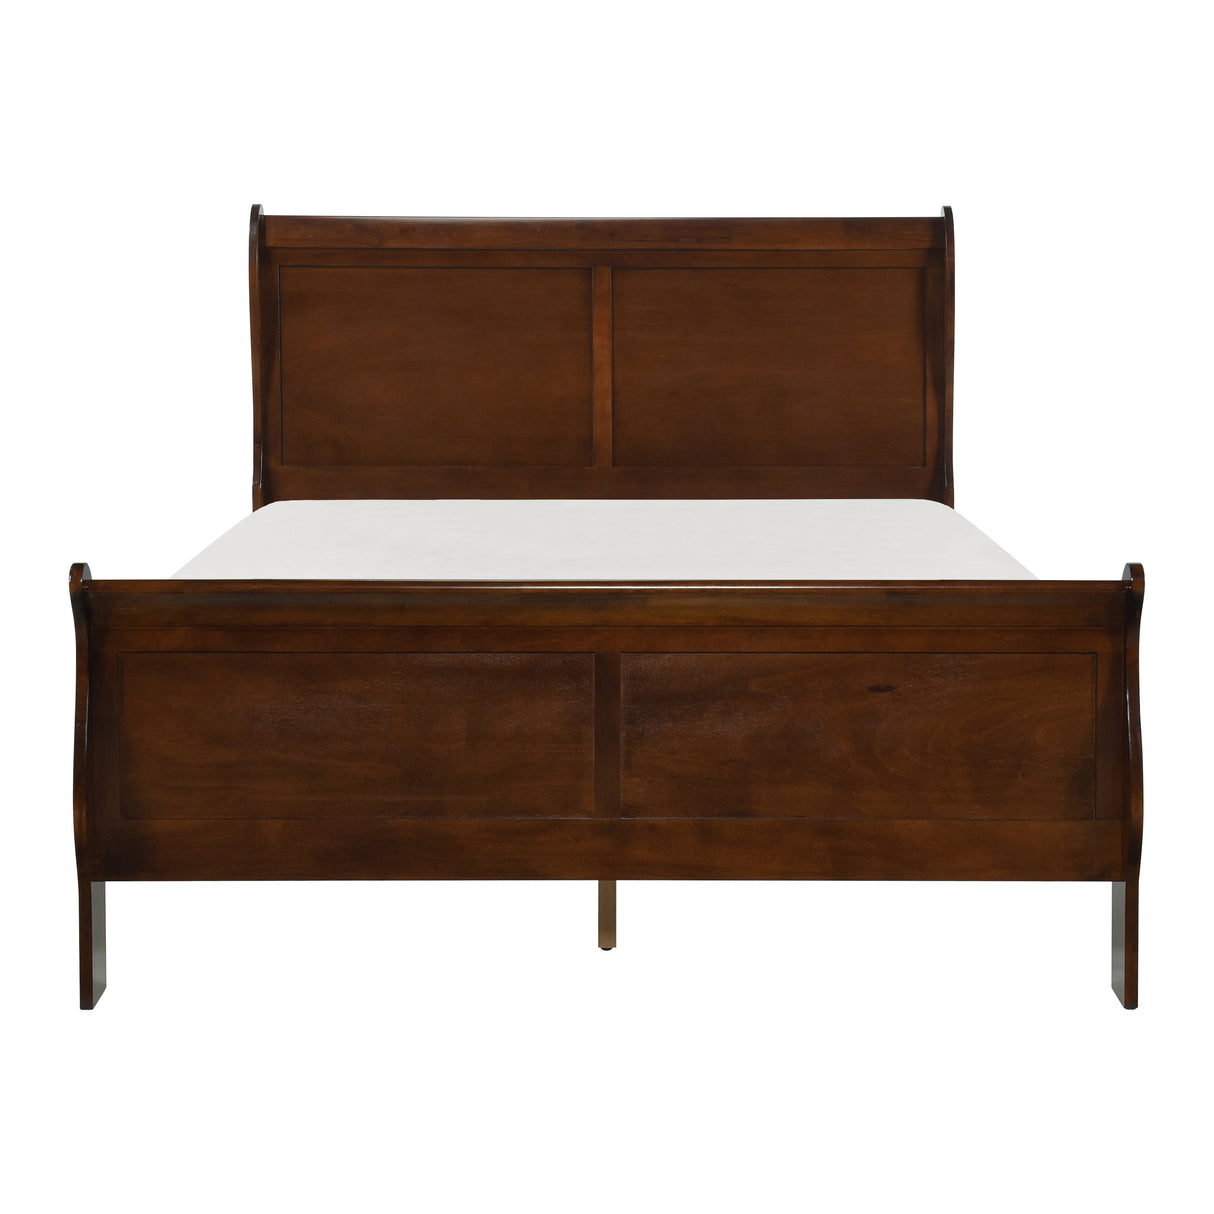 2147-1* (2)Queen Bed - Luna Furniture